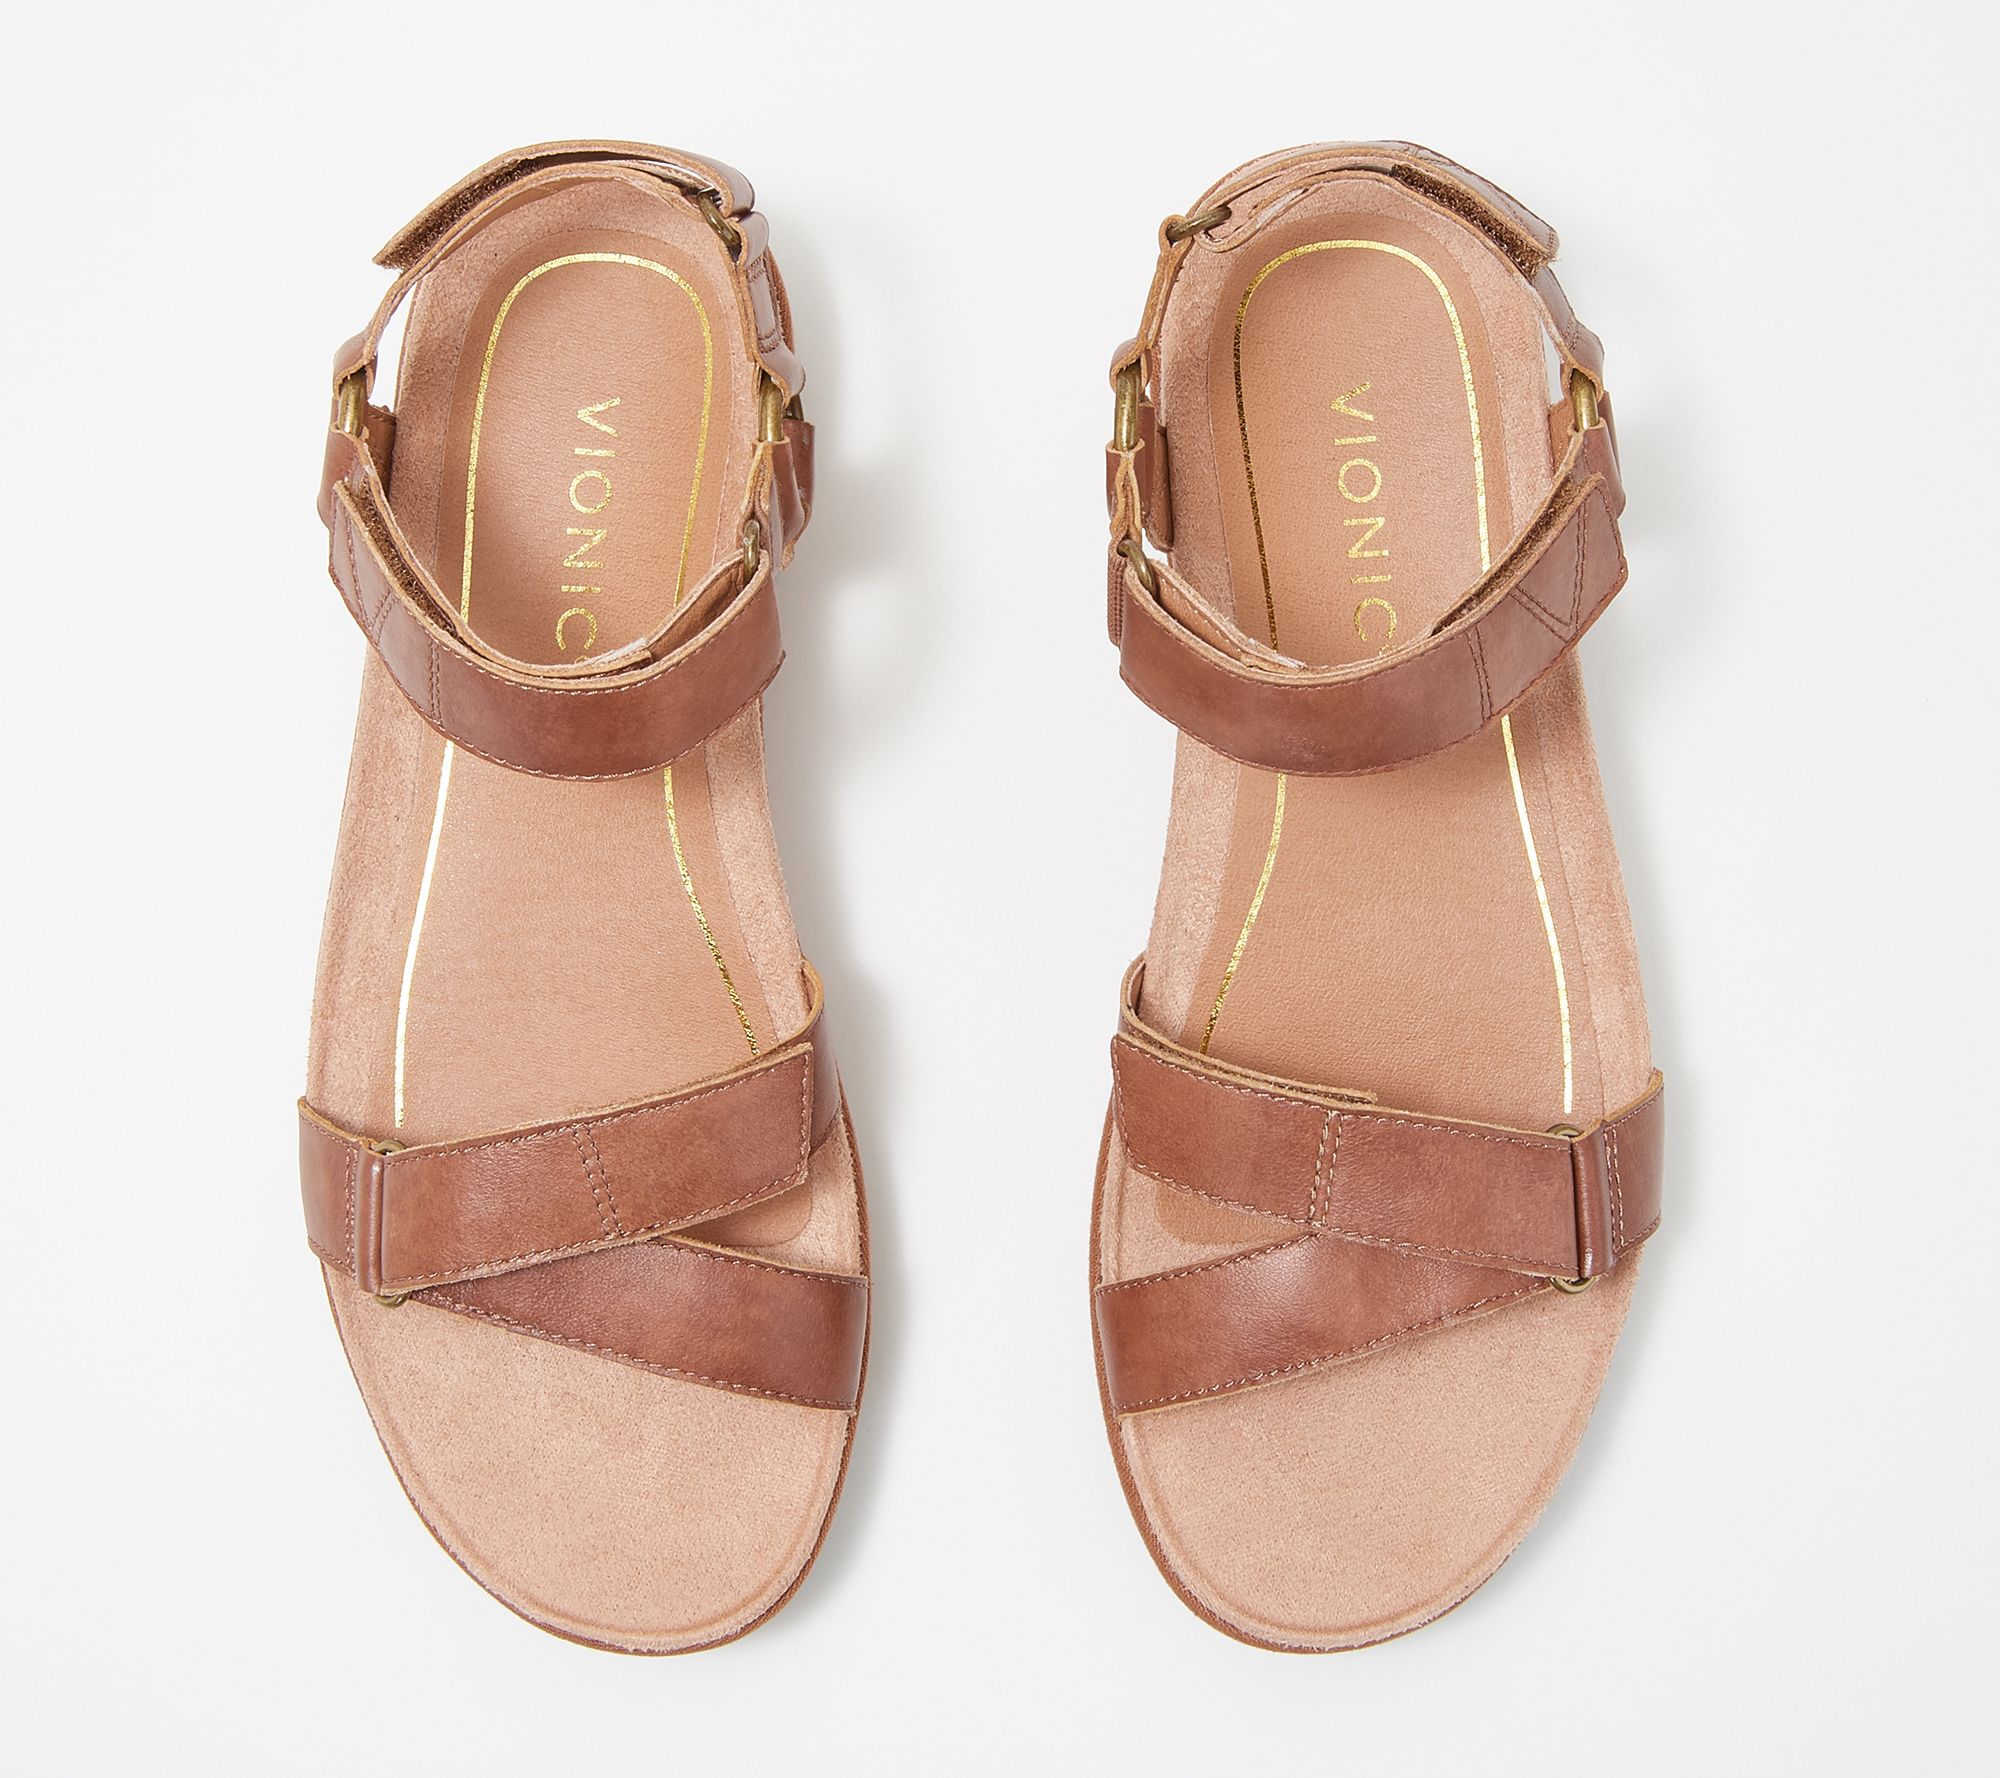 vionic kayan sandals